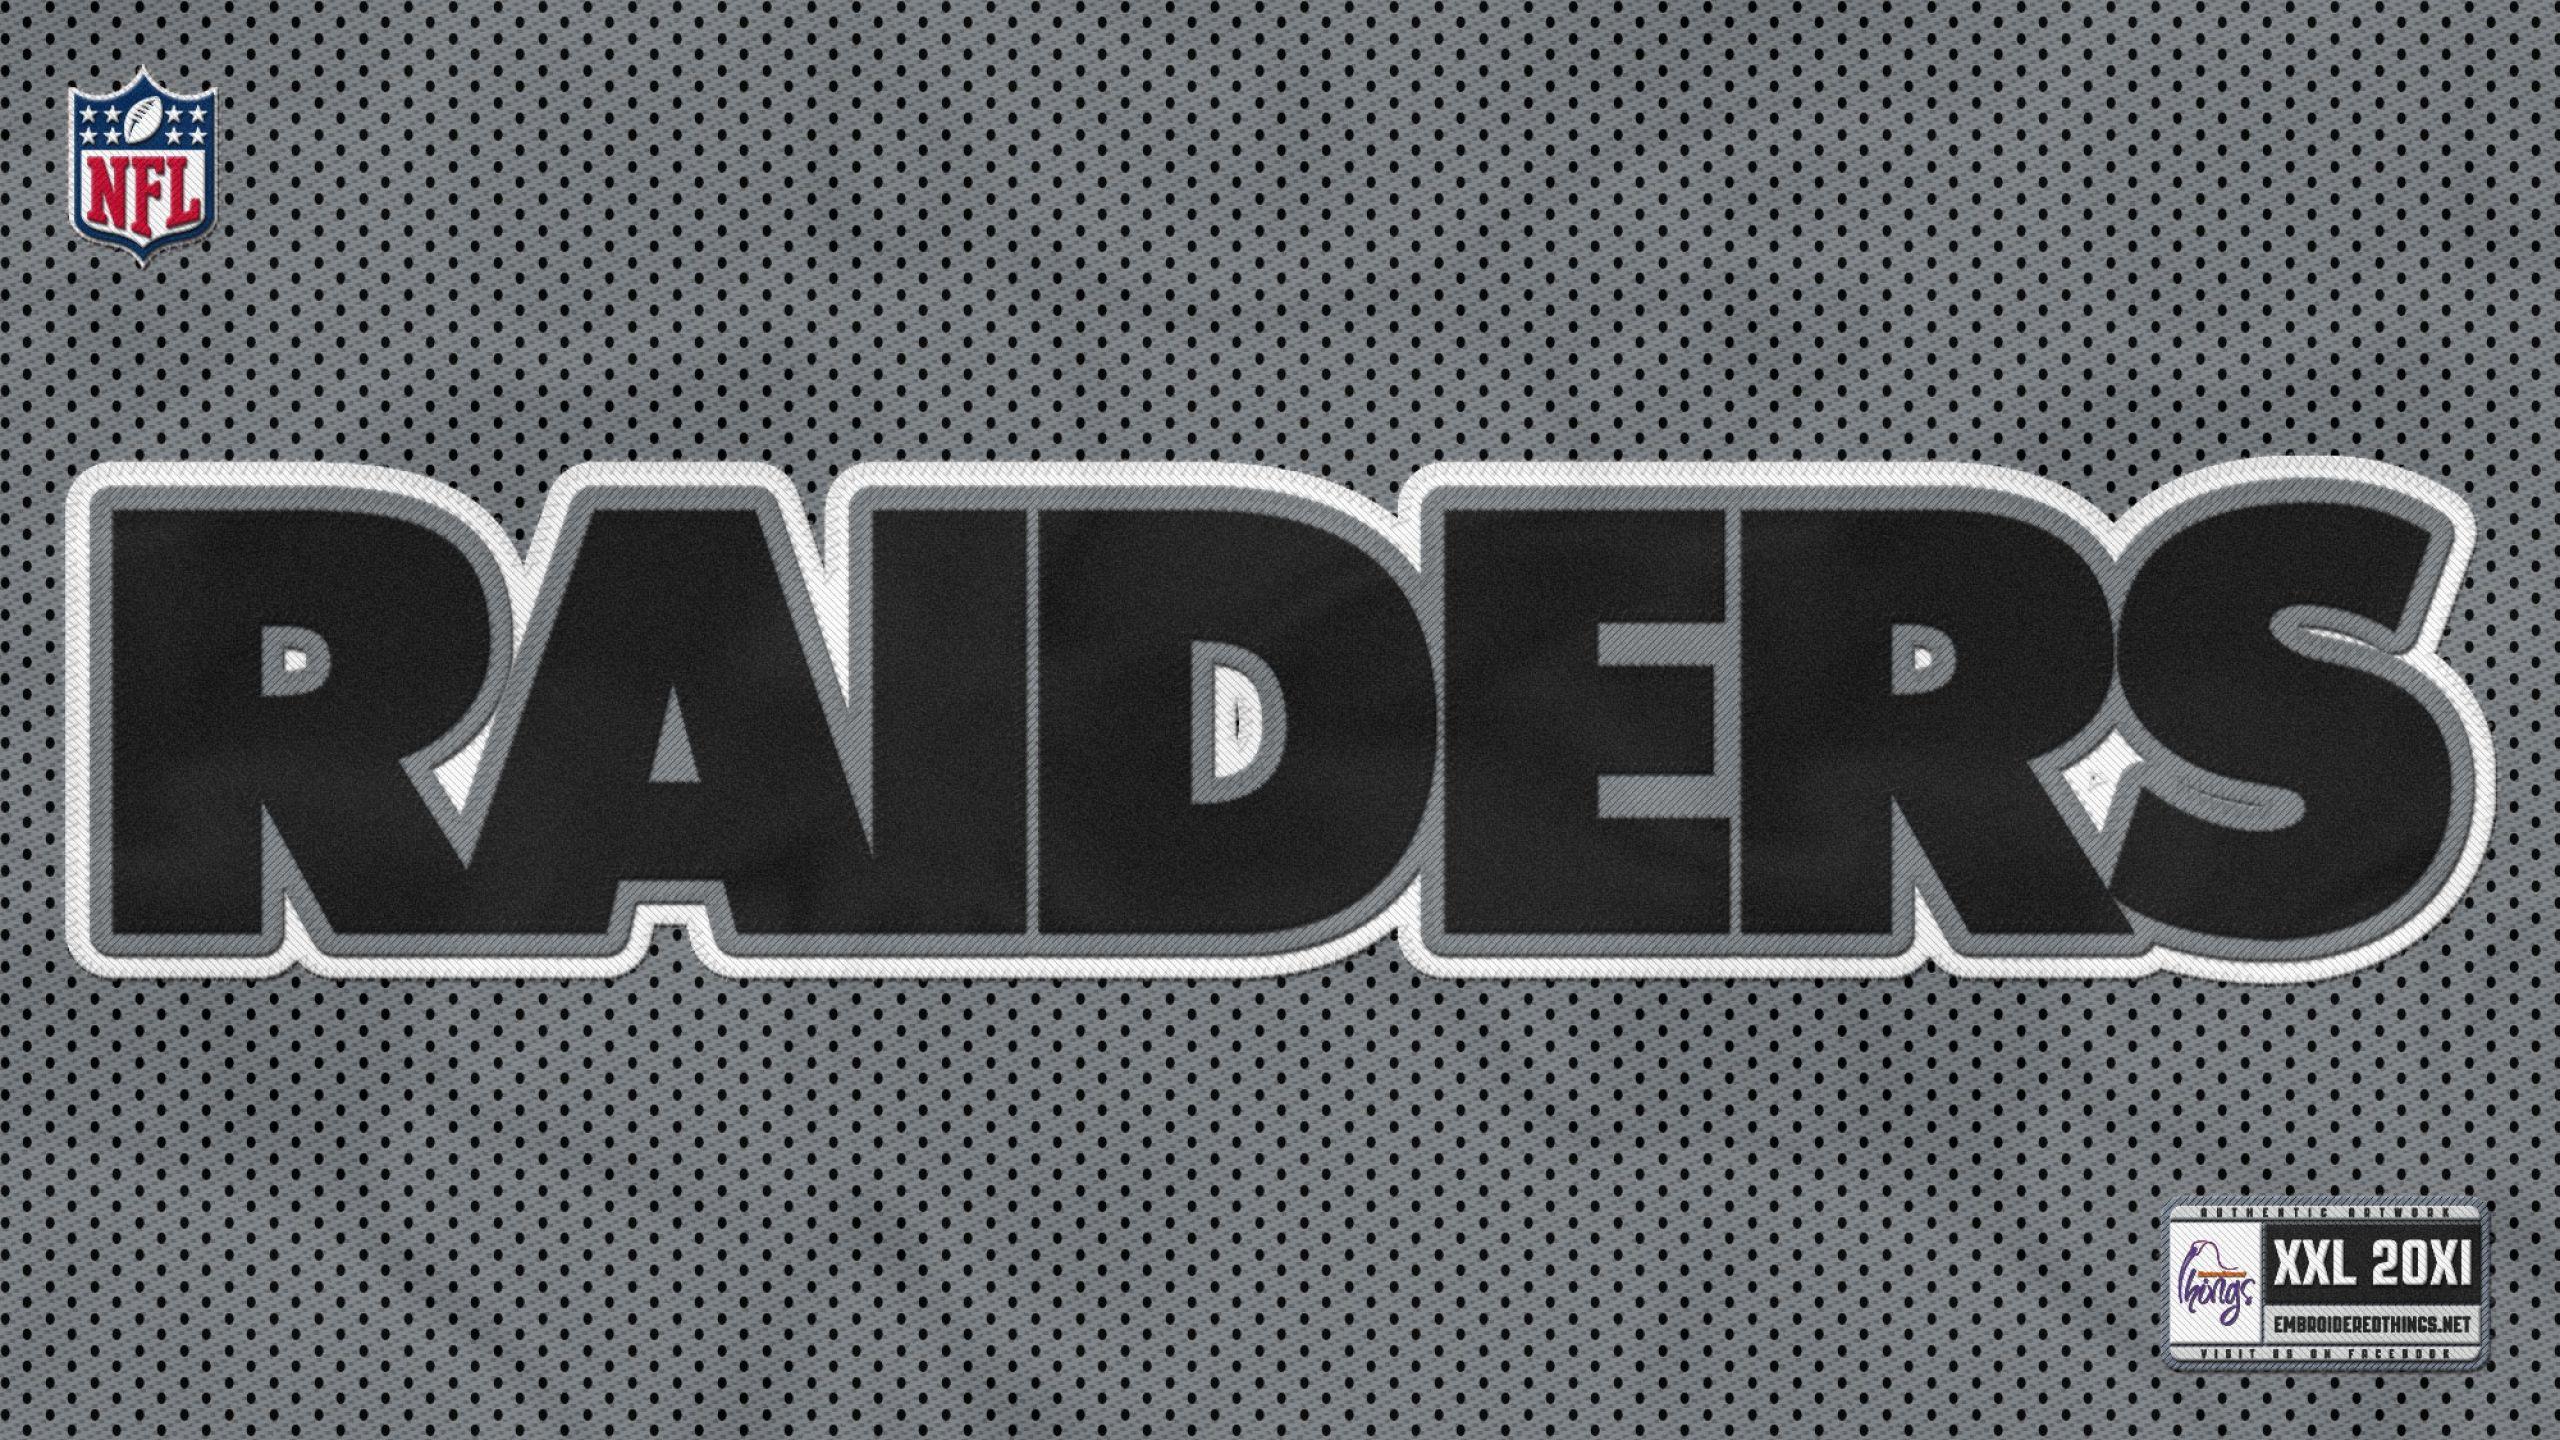 Raiders 2016 Wallpapers - Wallpaper Cave